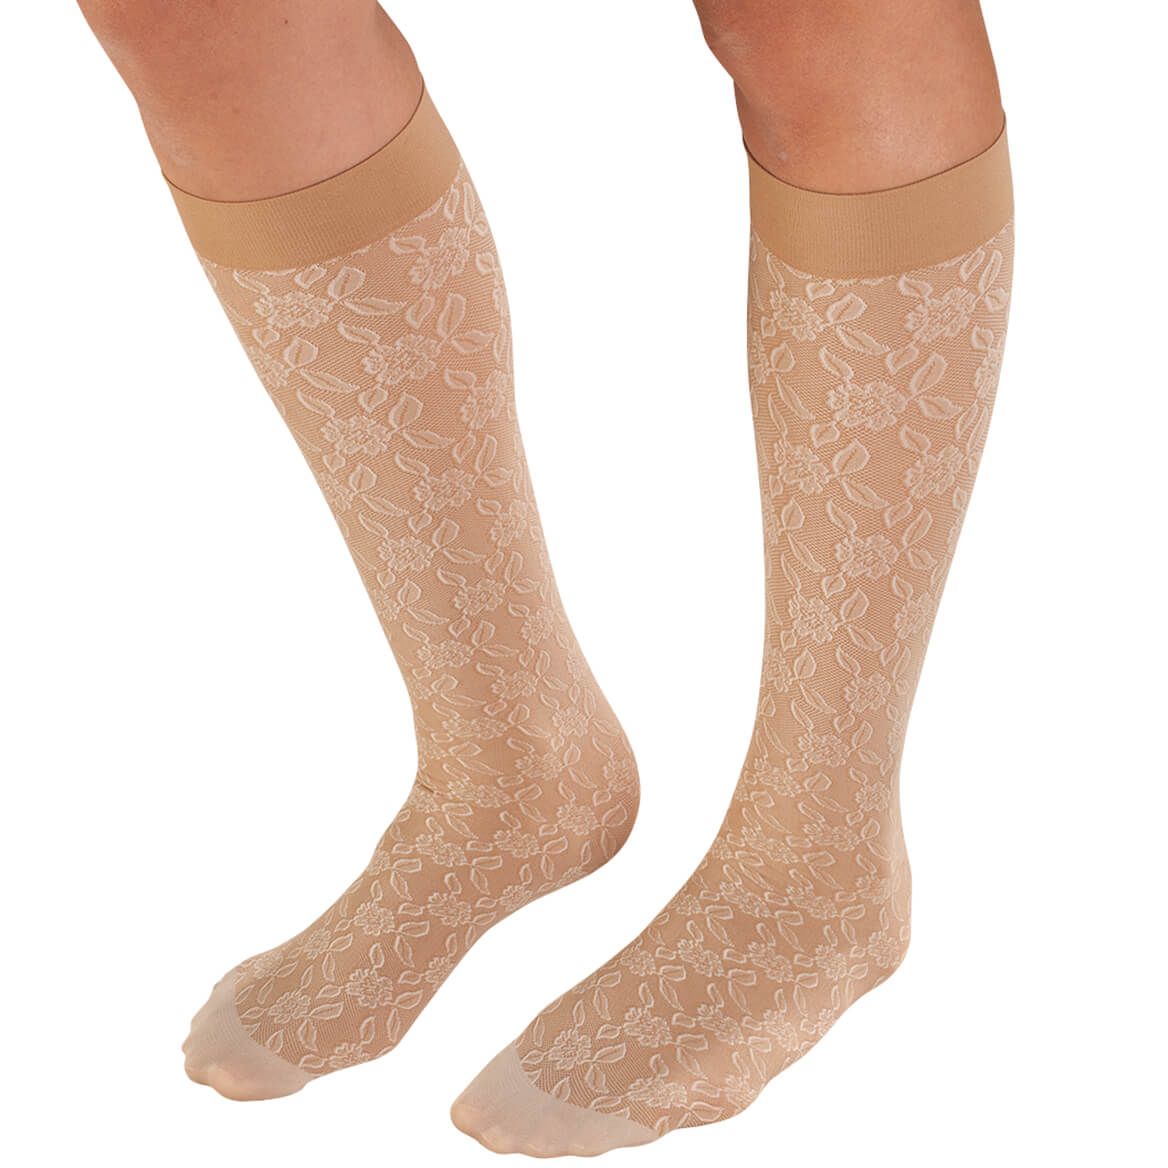 Celeste Stein Lace Compression Socks, 8-15 mmHg + '-' + 362443